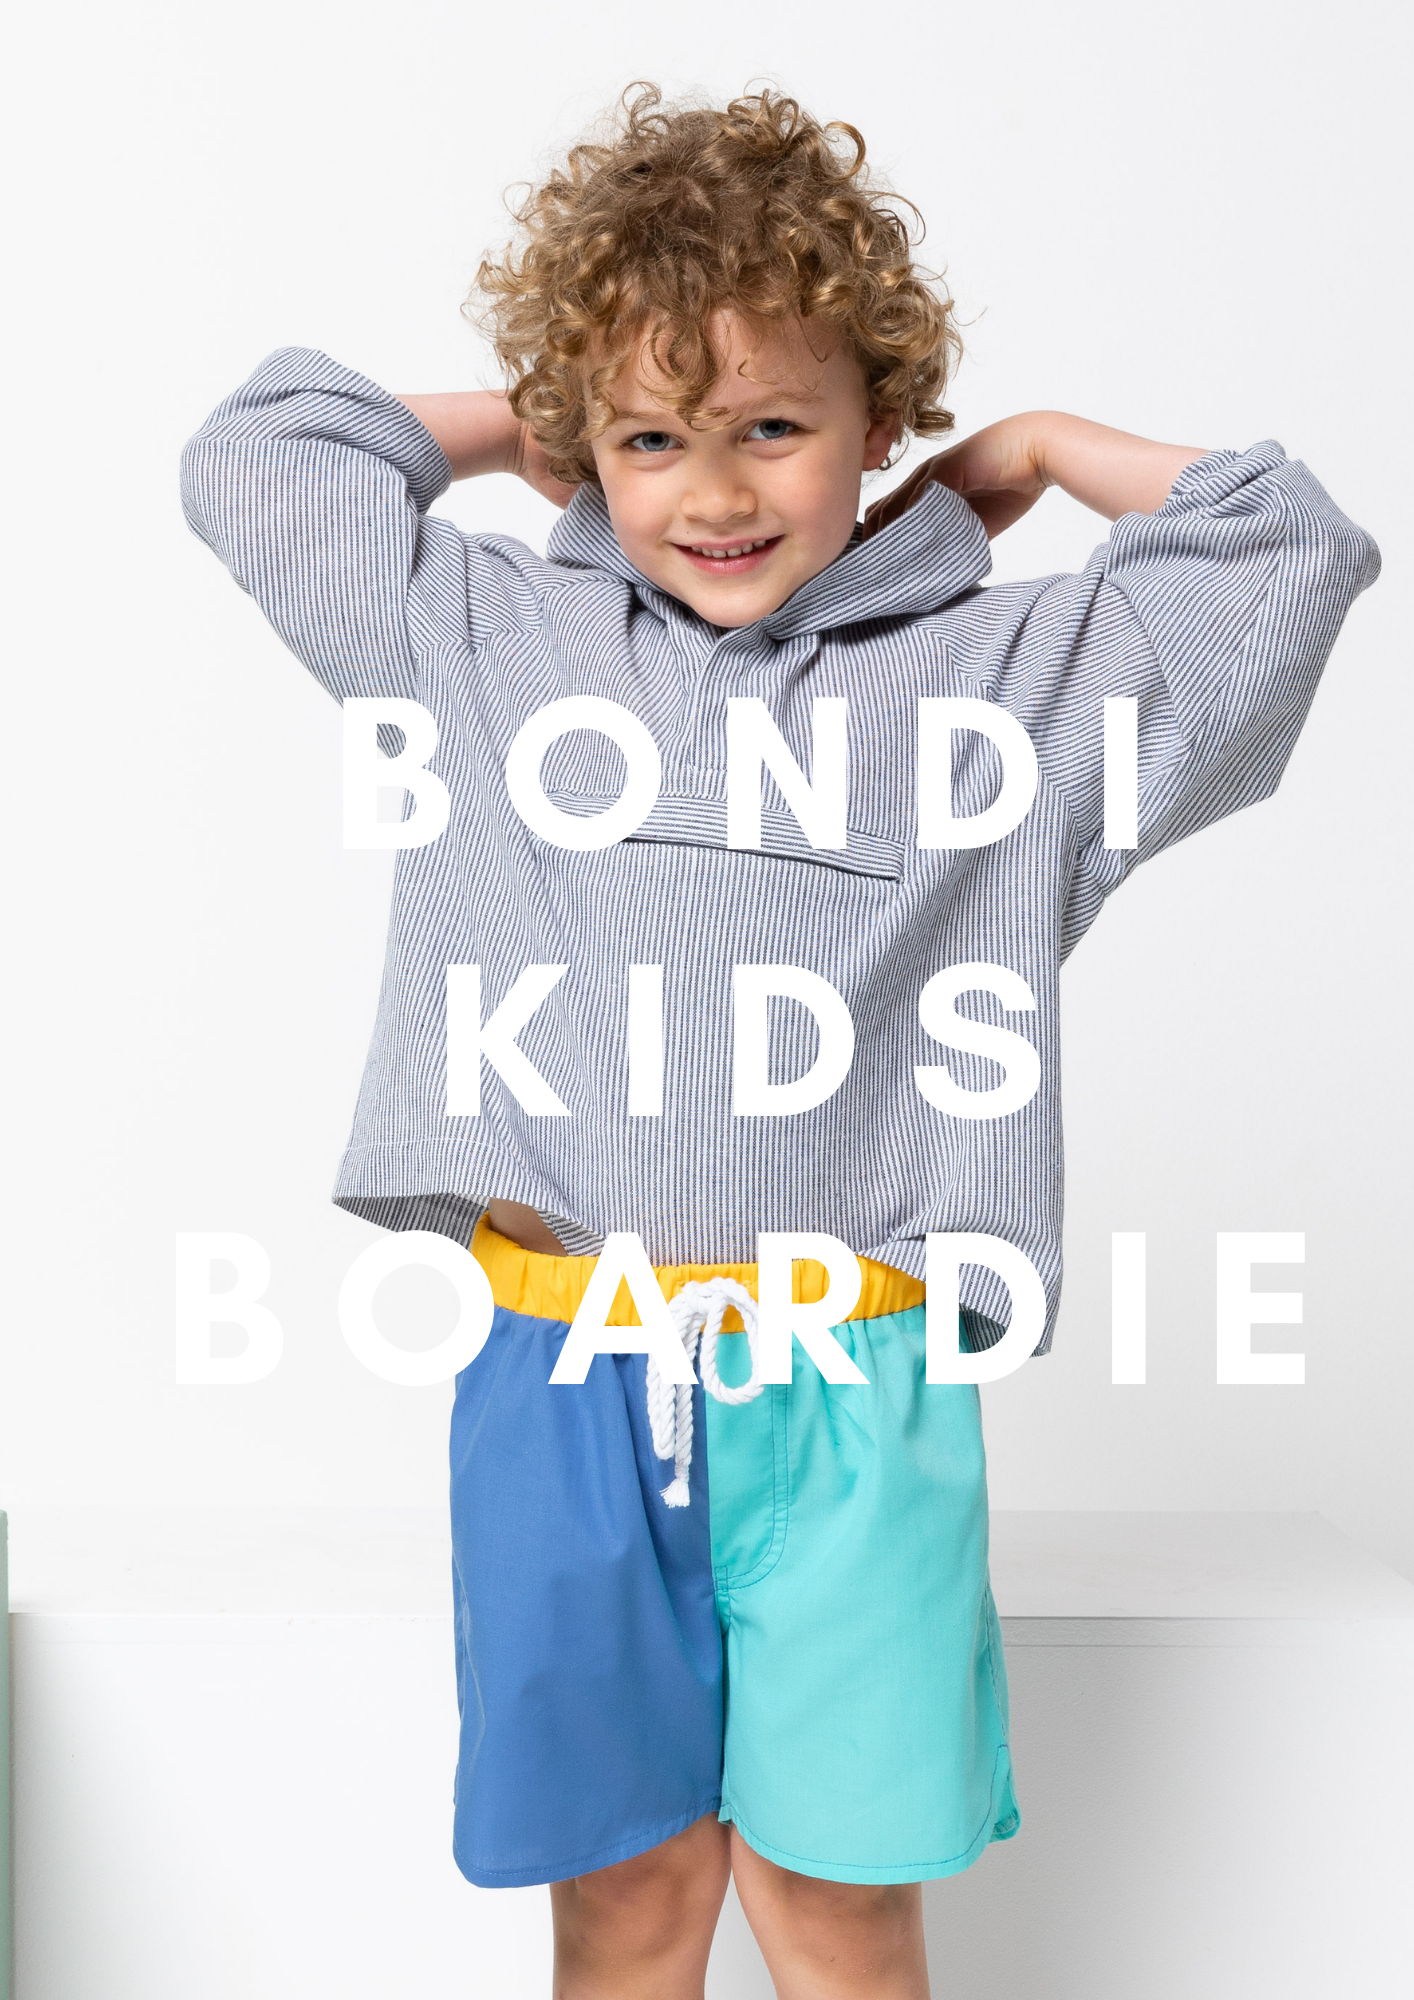 July bonus patterns when shopping at www.stylearc.com | MELODY KIDS SKIRT & BONDIE BOARDIE